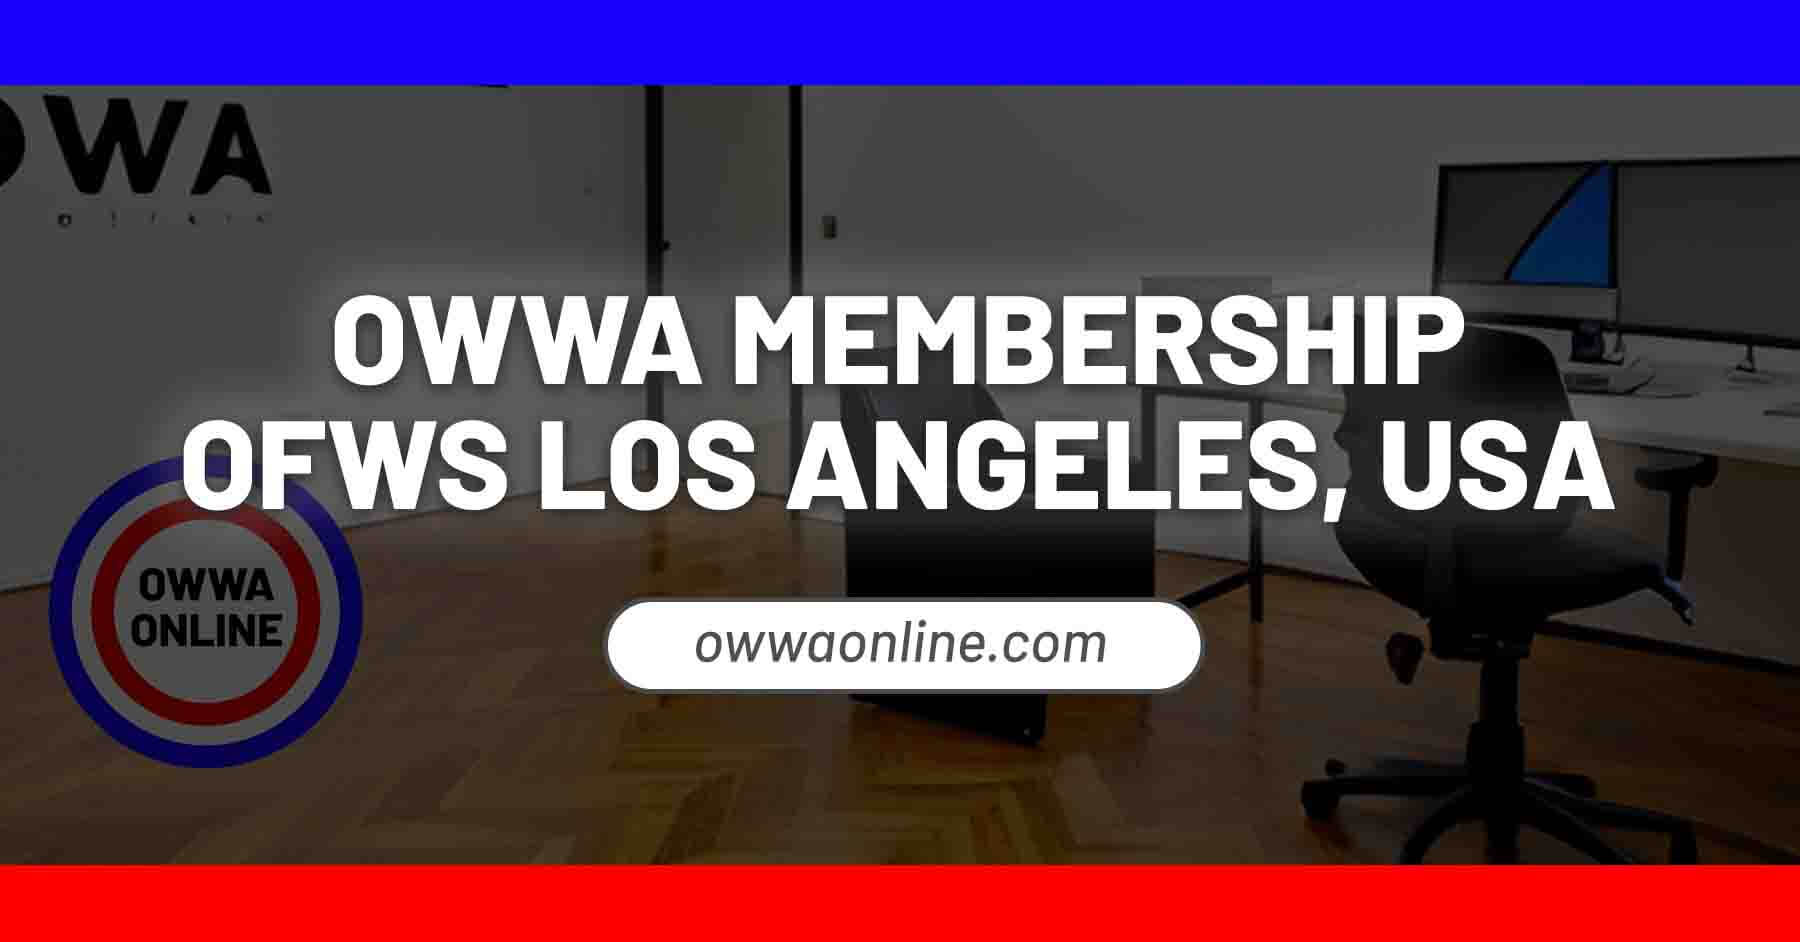 application for owwa membership renewal in los angeles california usa